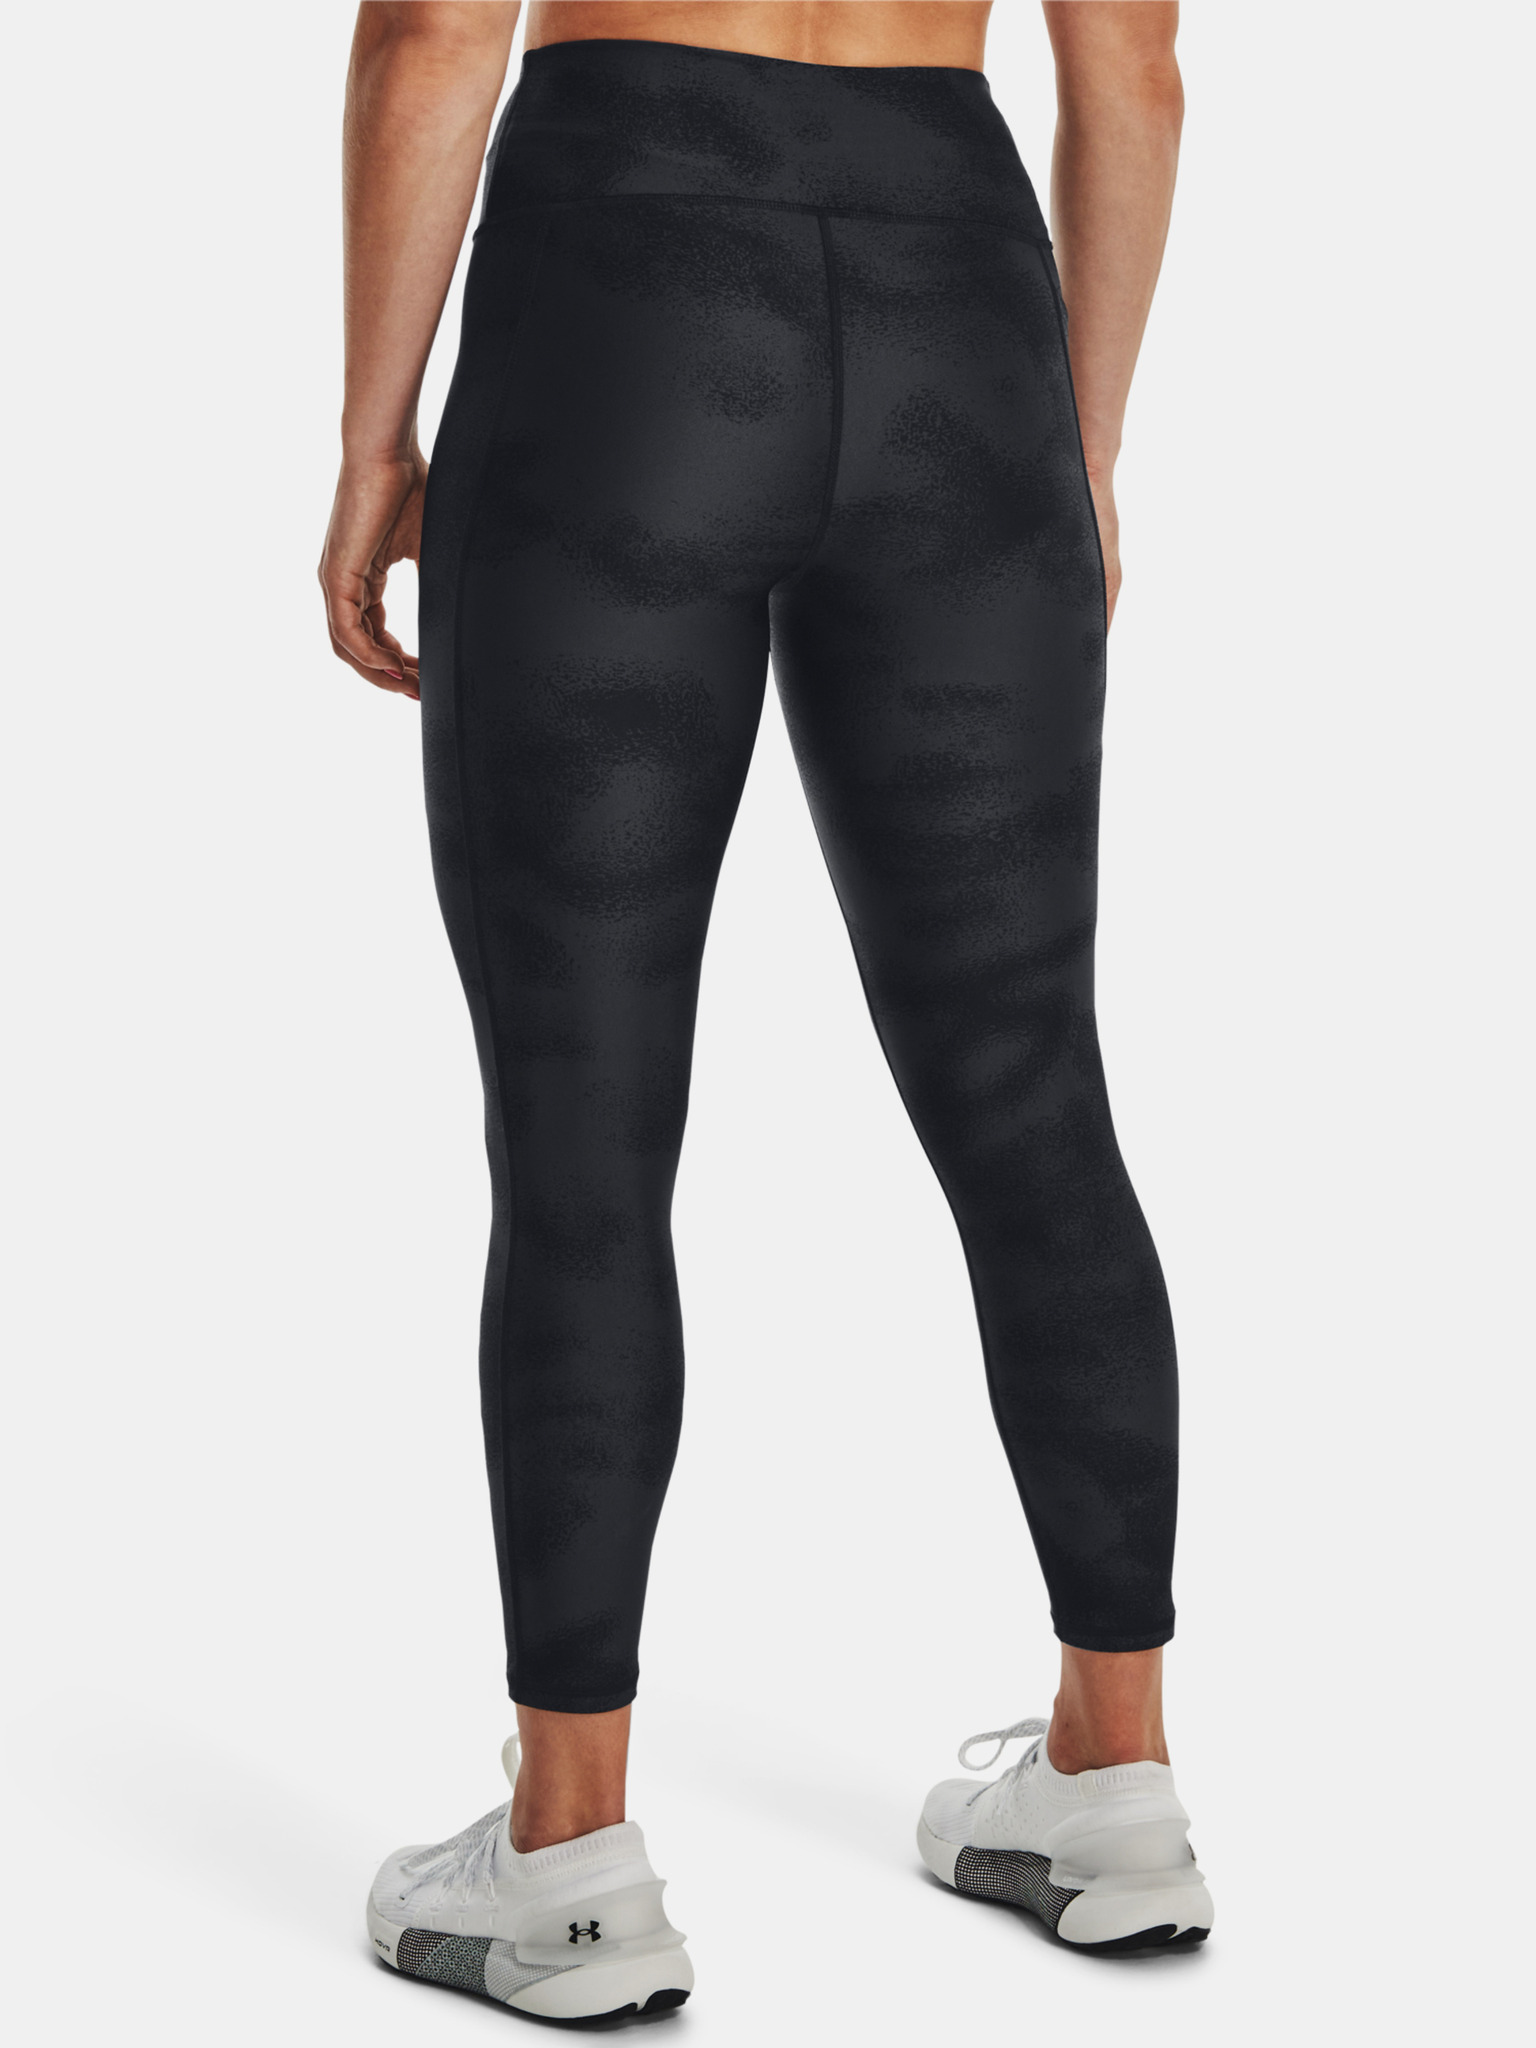 Under Armour HeatGear Novelty Ankle Womens Active Pants Size XL, Color:  Black/Black